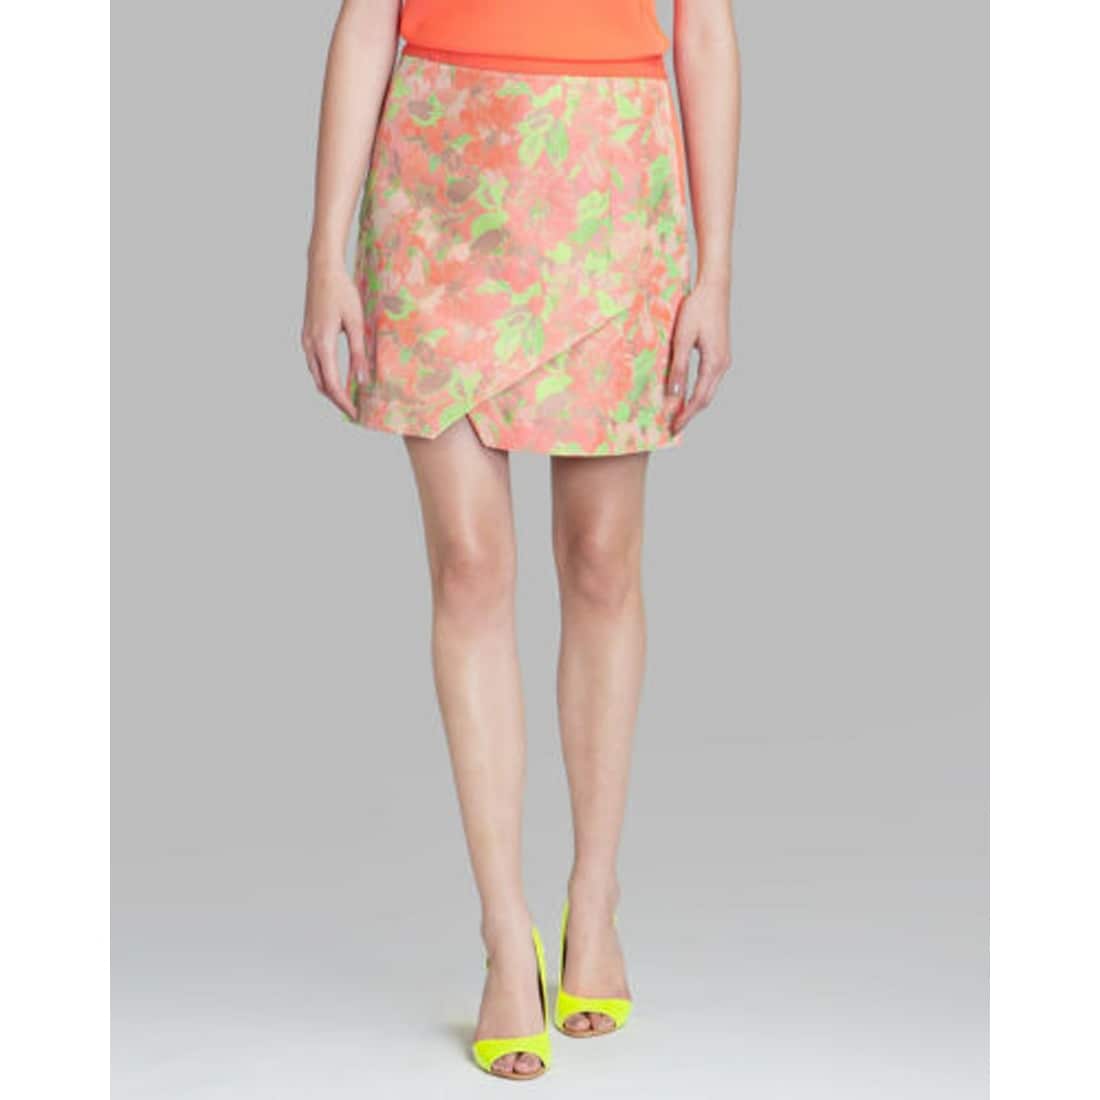 Ted Baker London Keleche Floral Jacquard Wrap Skirt, Pink, 2